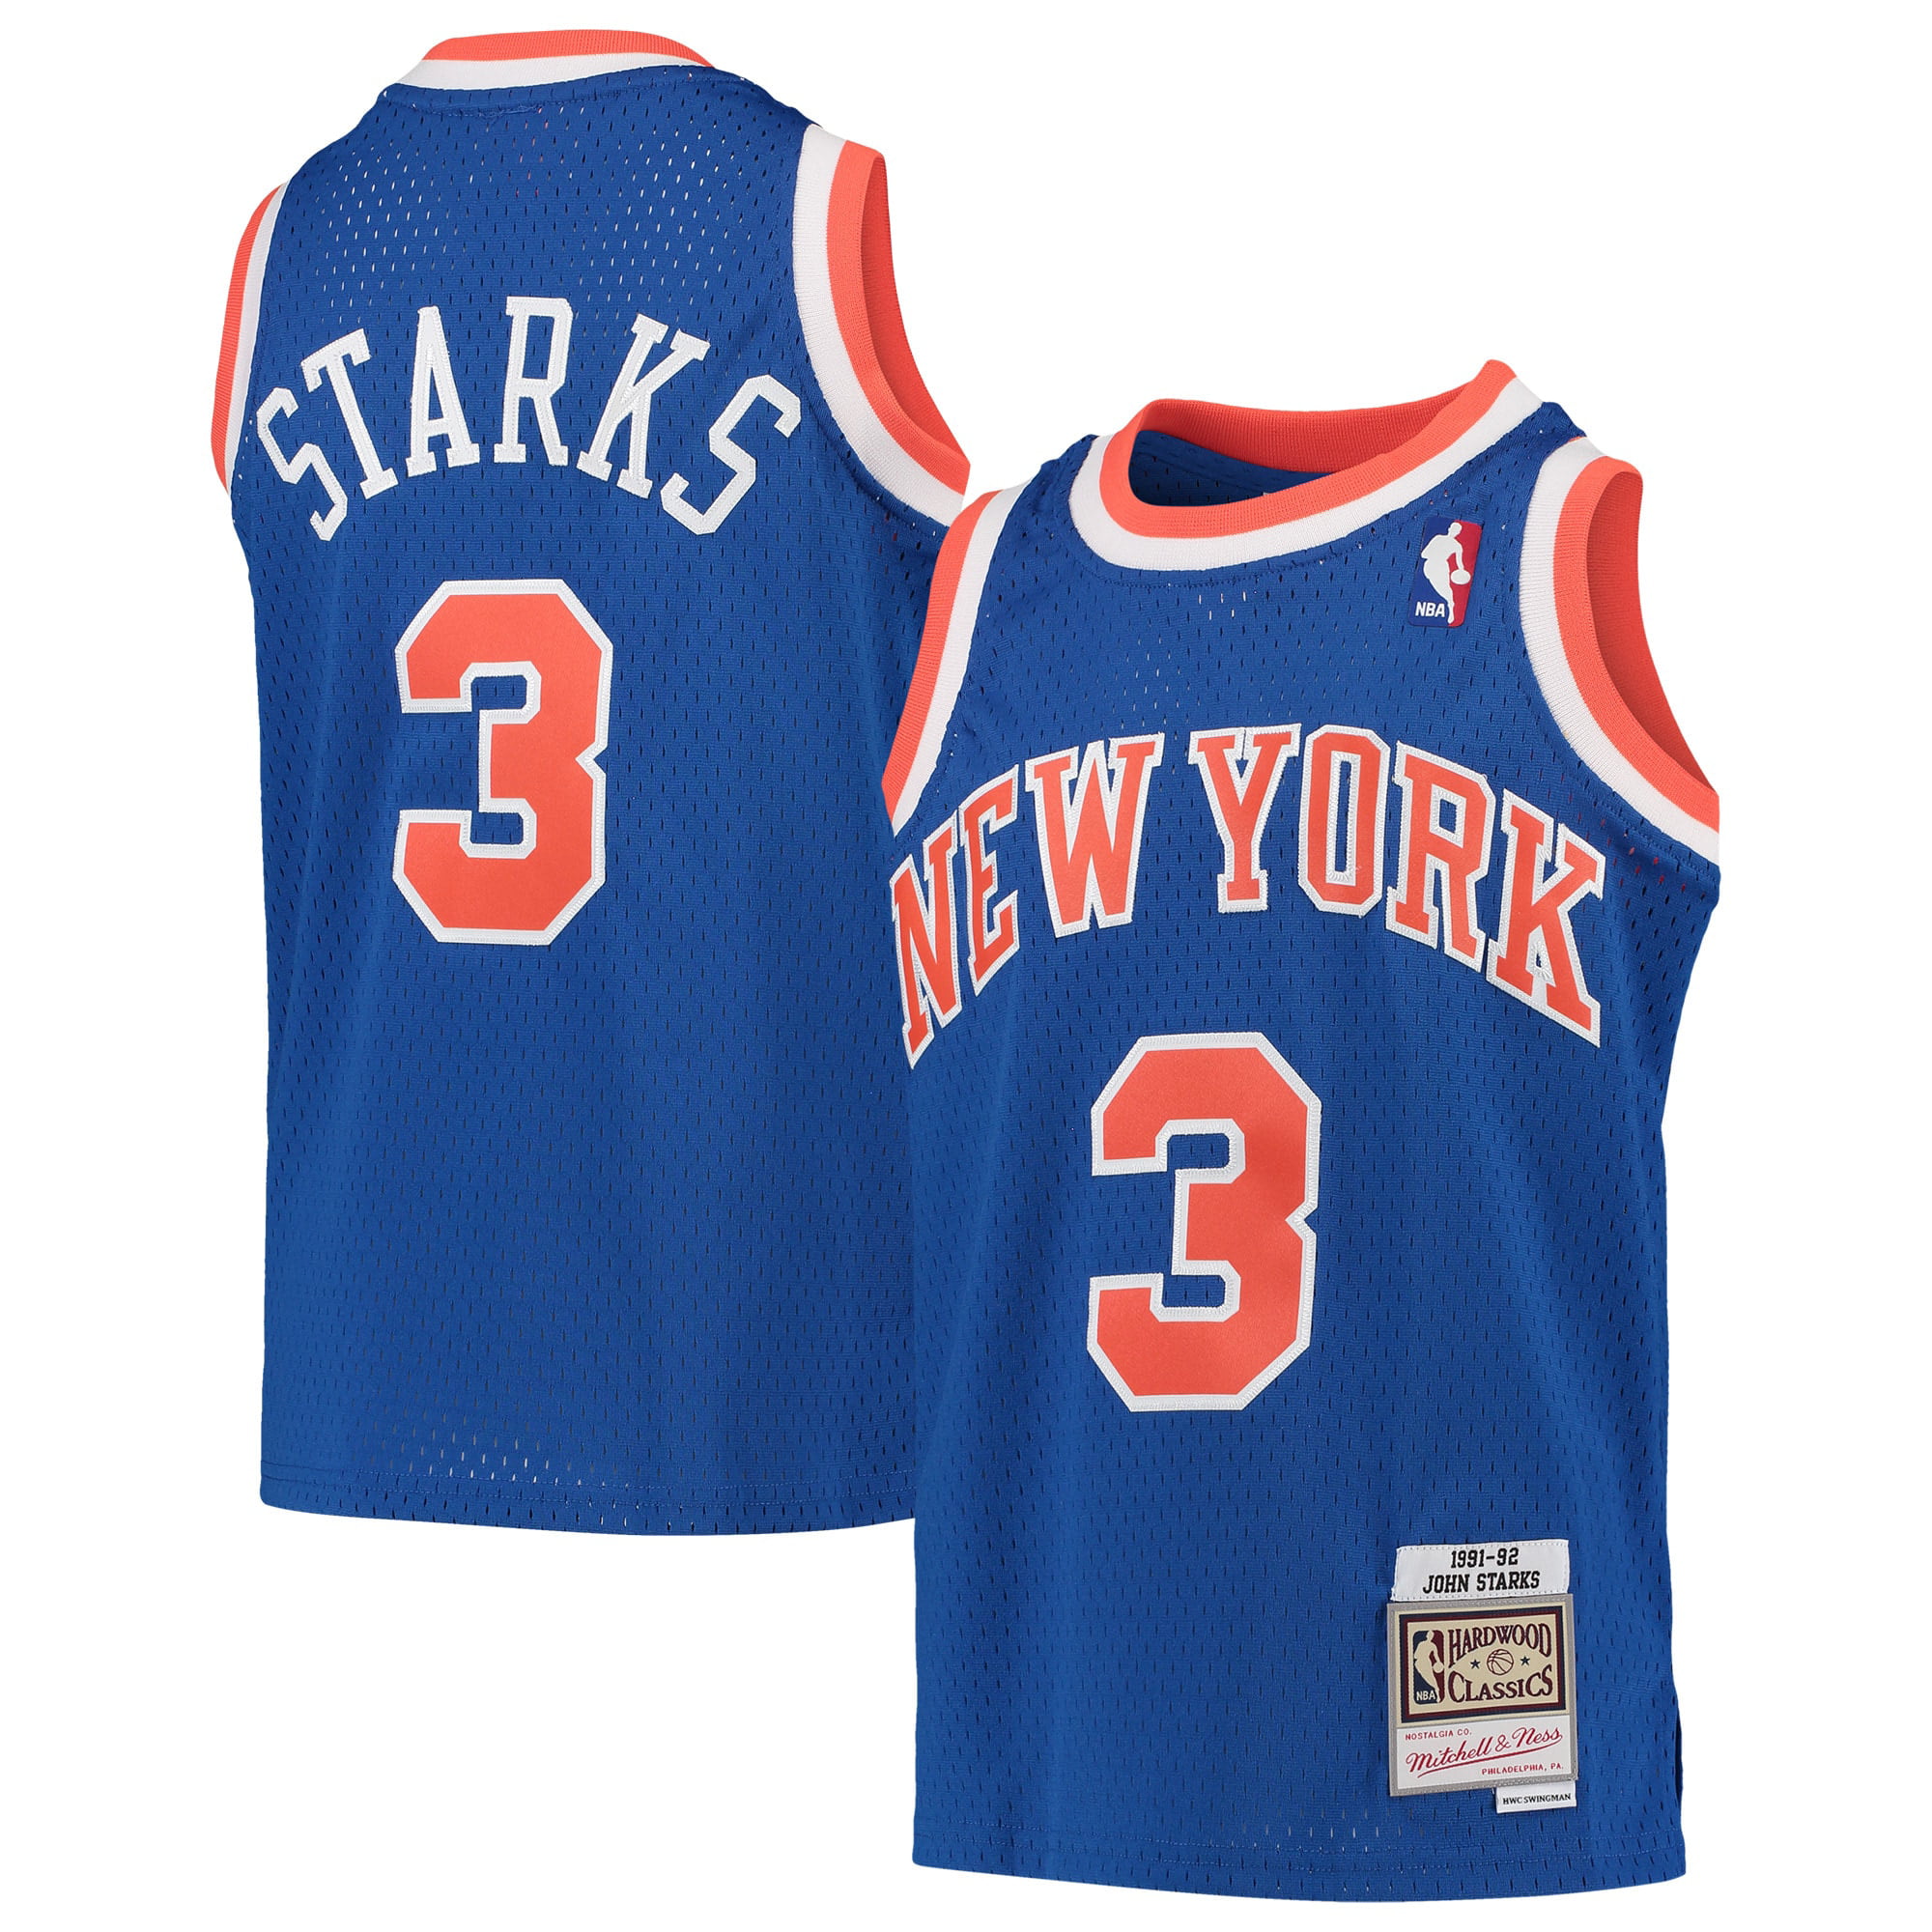 Men's Fanatics Authentic Royal New York Knicks Fast Break Team